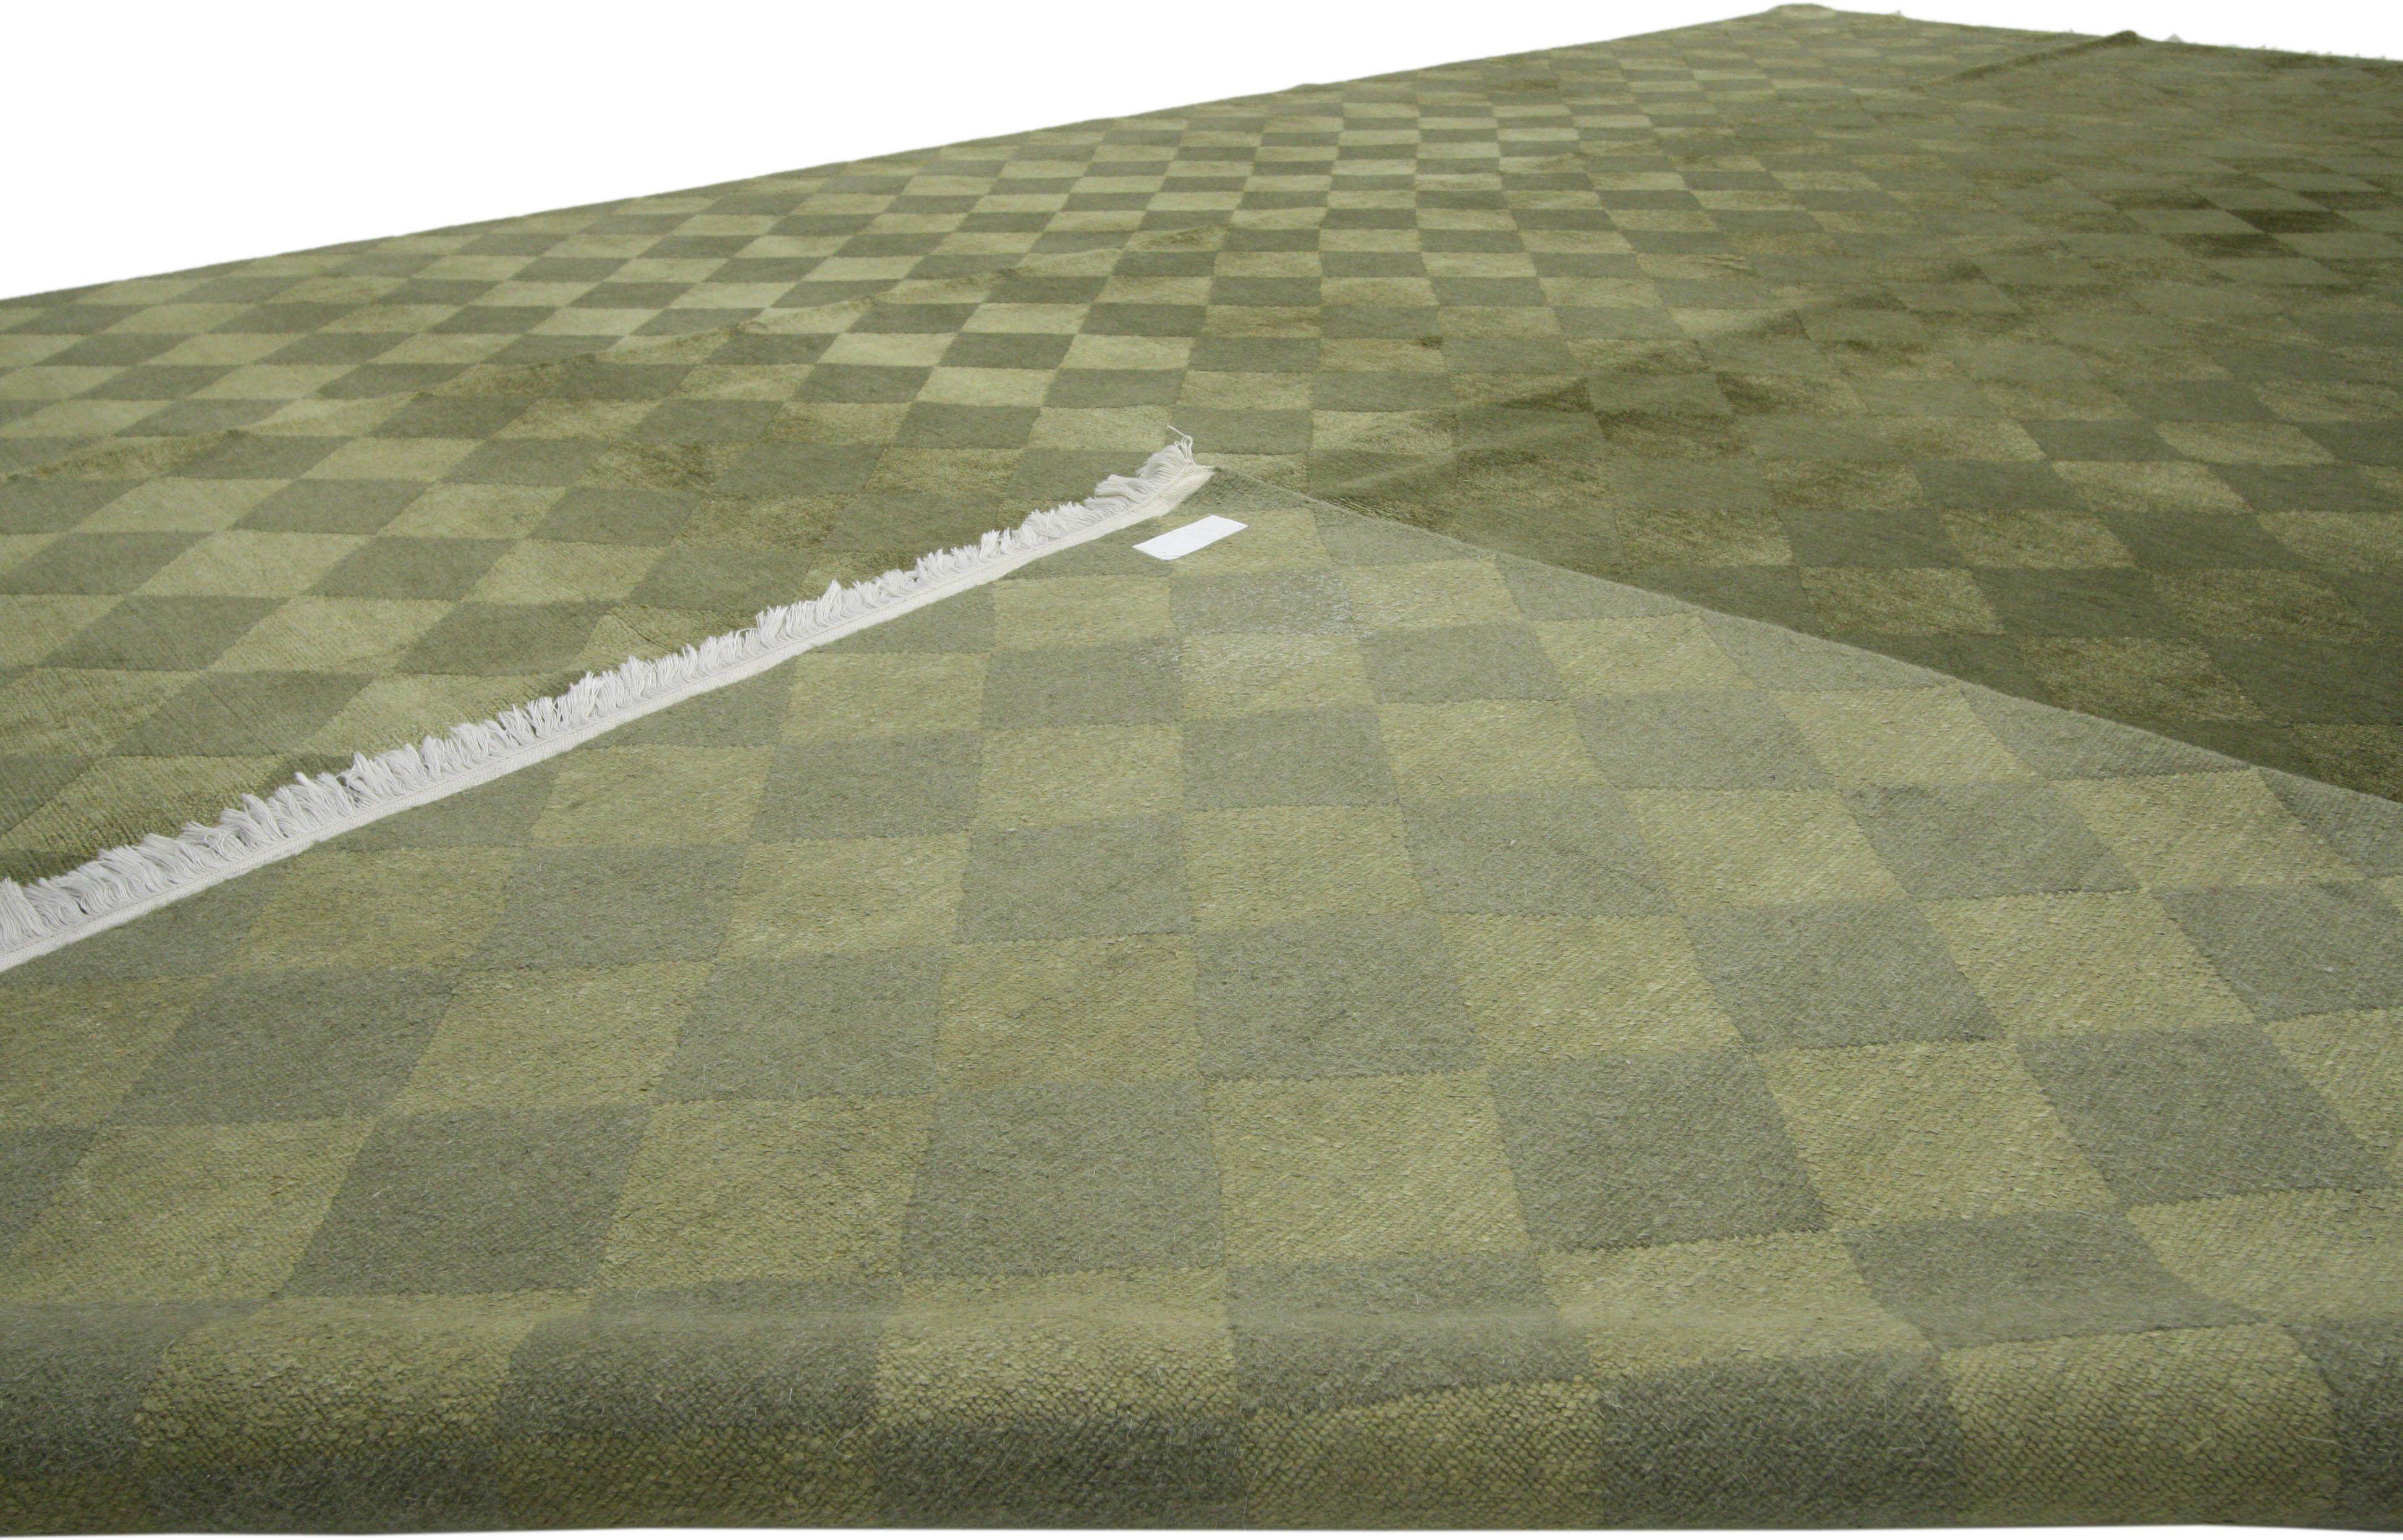 diamond checkerboard rug